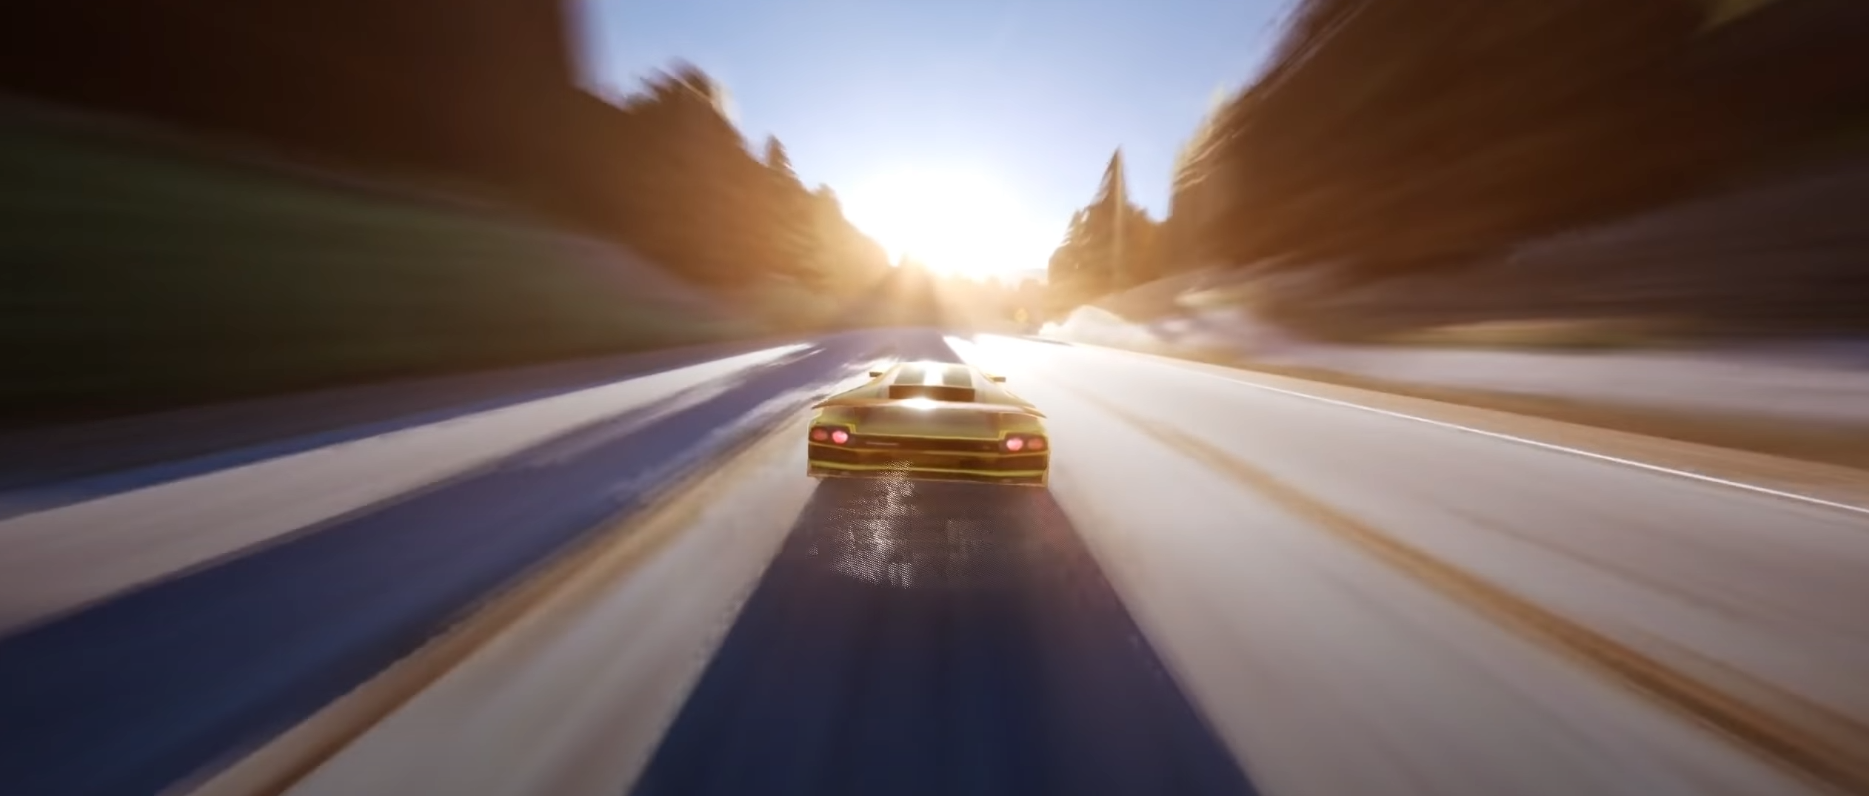 Need For Speed Underground 2 RTX remaster gets another stunning update